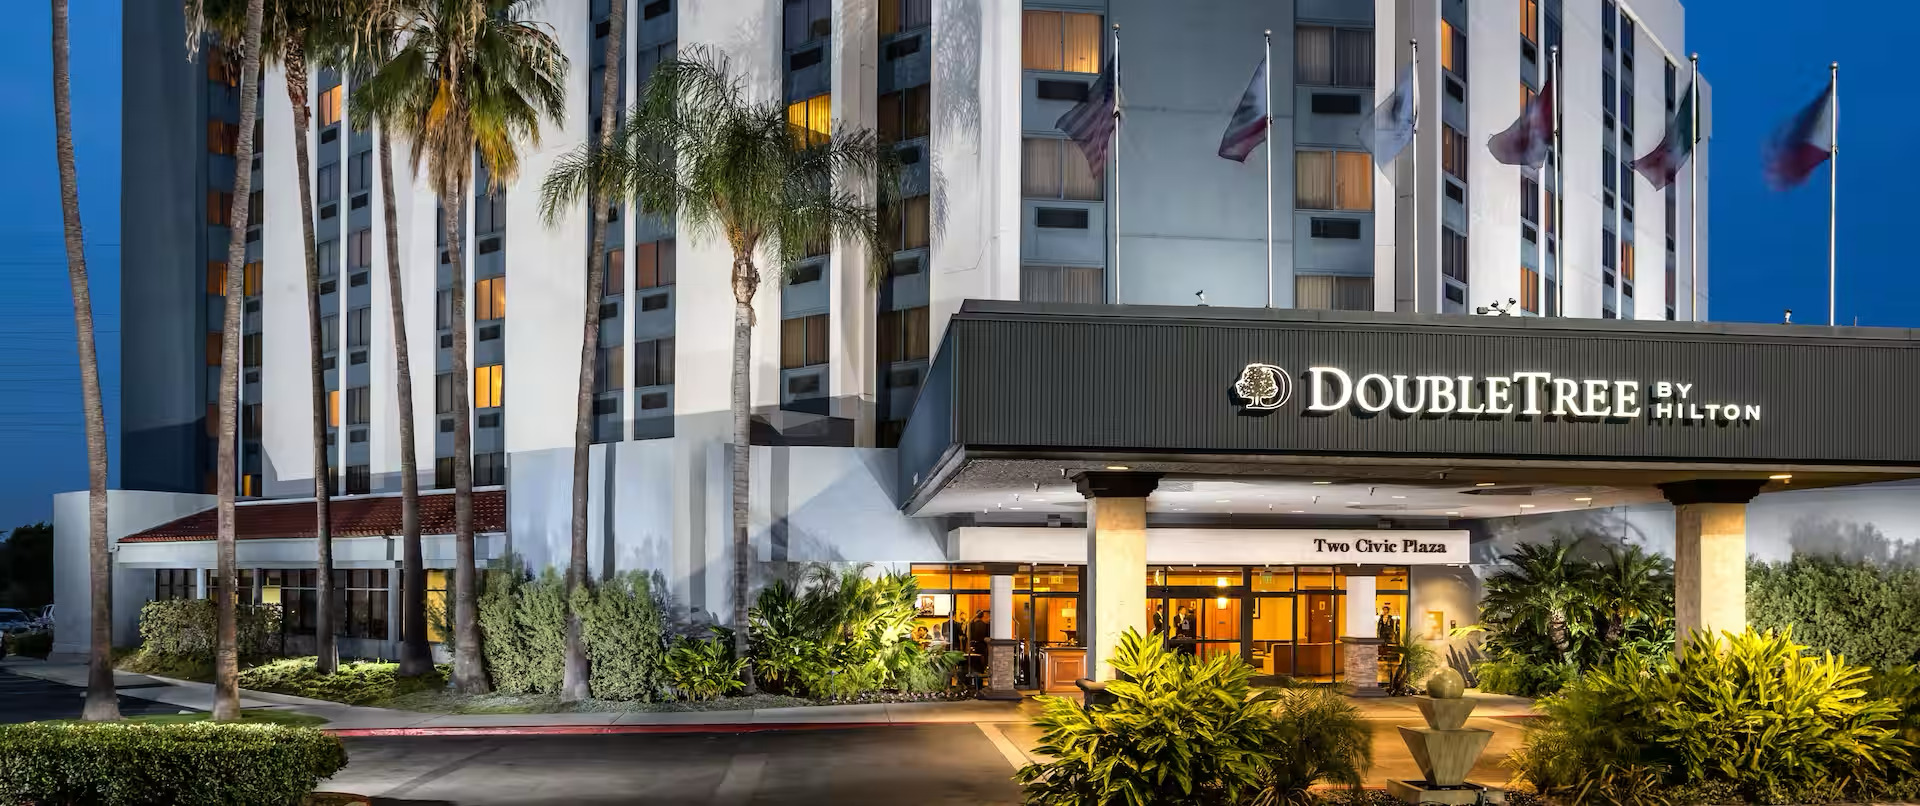 Photo of Doubletree by Hilton Hotel Carson, Carson, CA